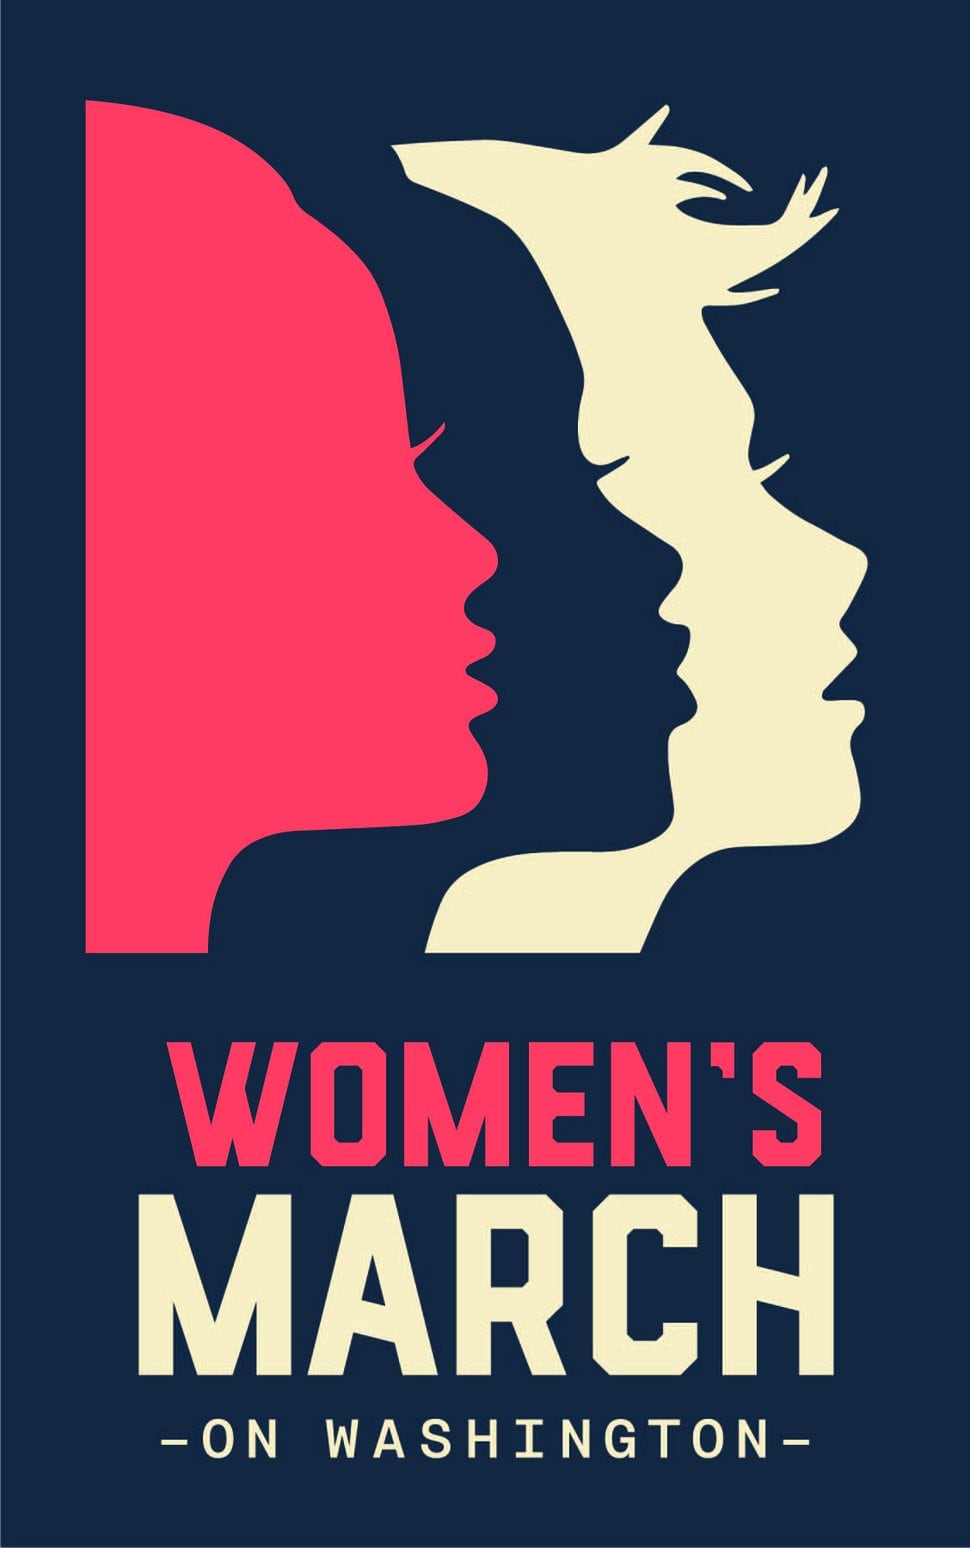 (Image courtesy of Nicole LaRue) Nicole LaRue designed the logo for the Women's March on Washington in 2017.